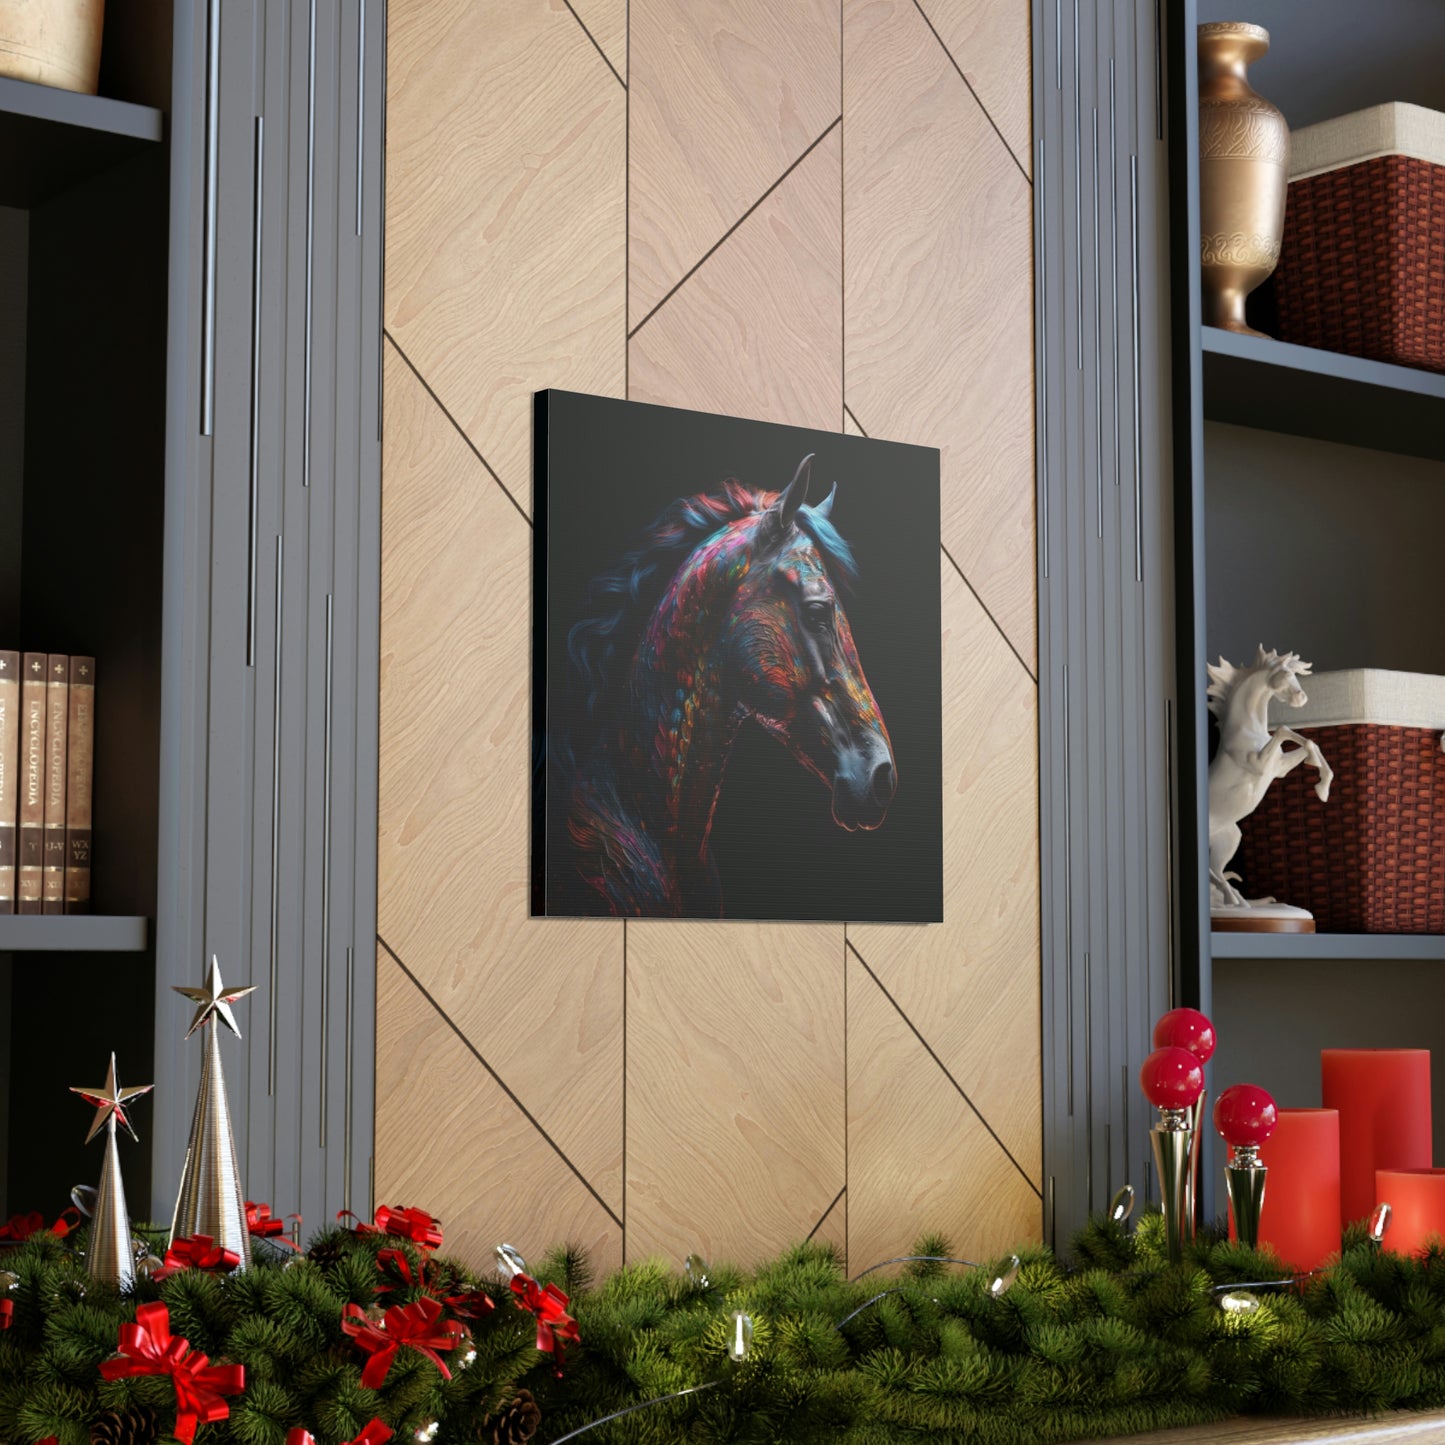 Canvas Gallery Wraps Neon Horses 3